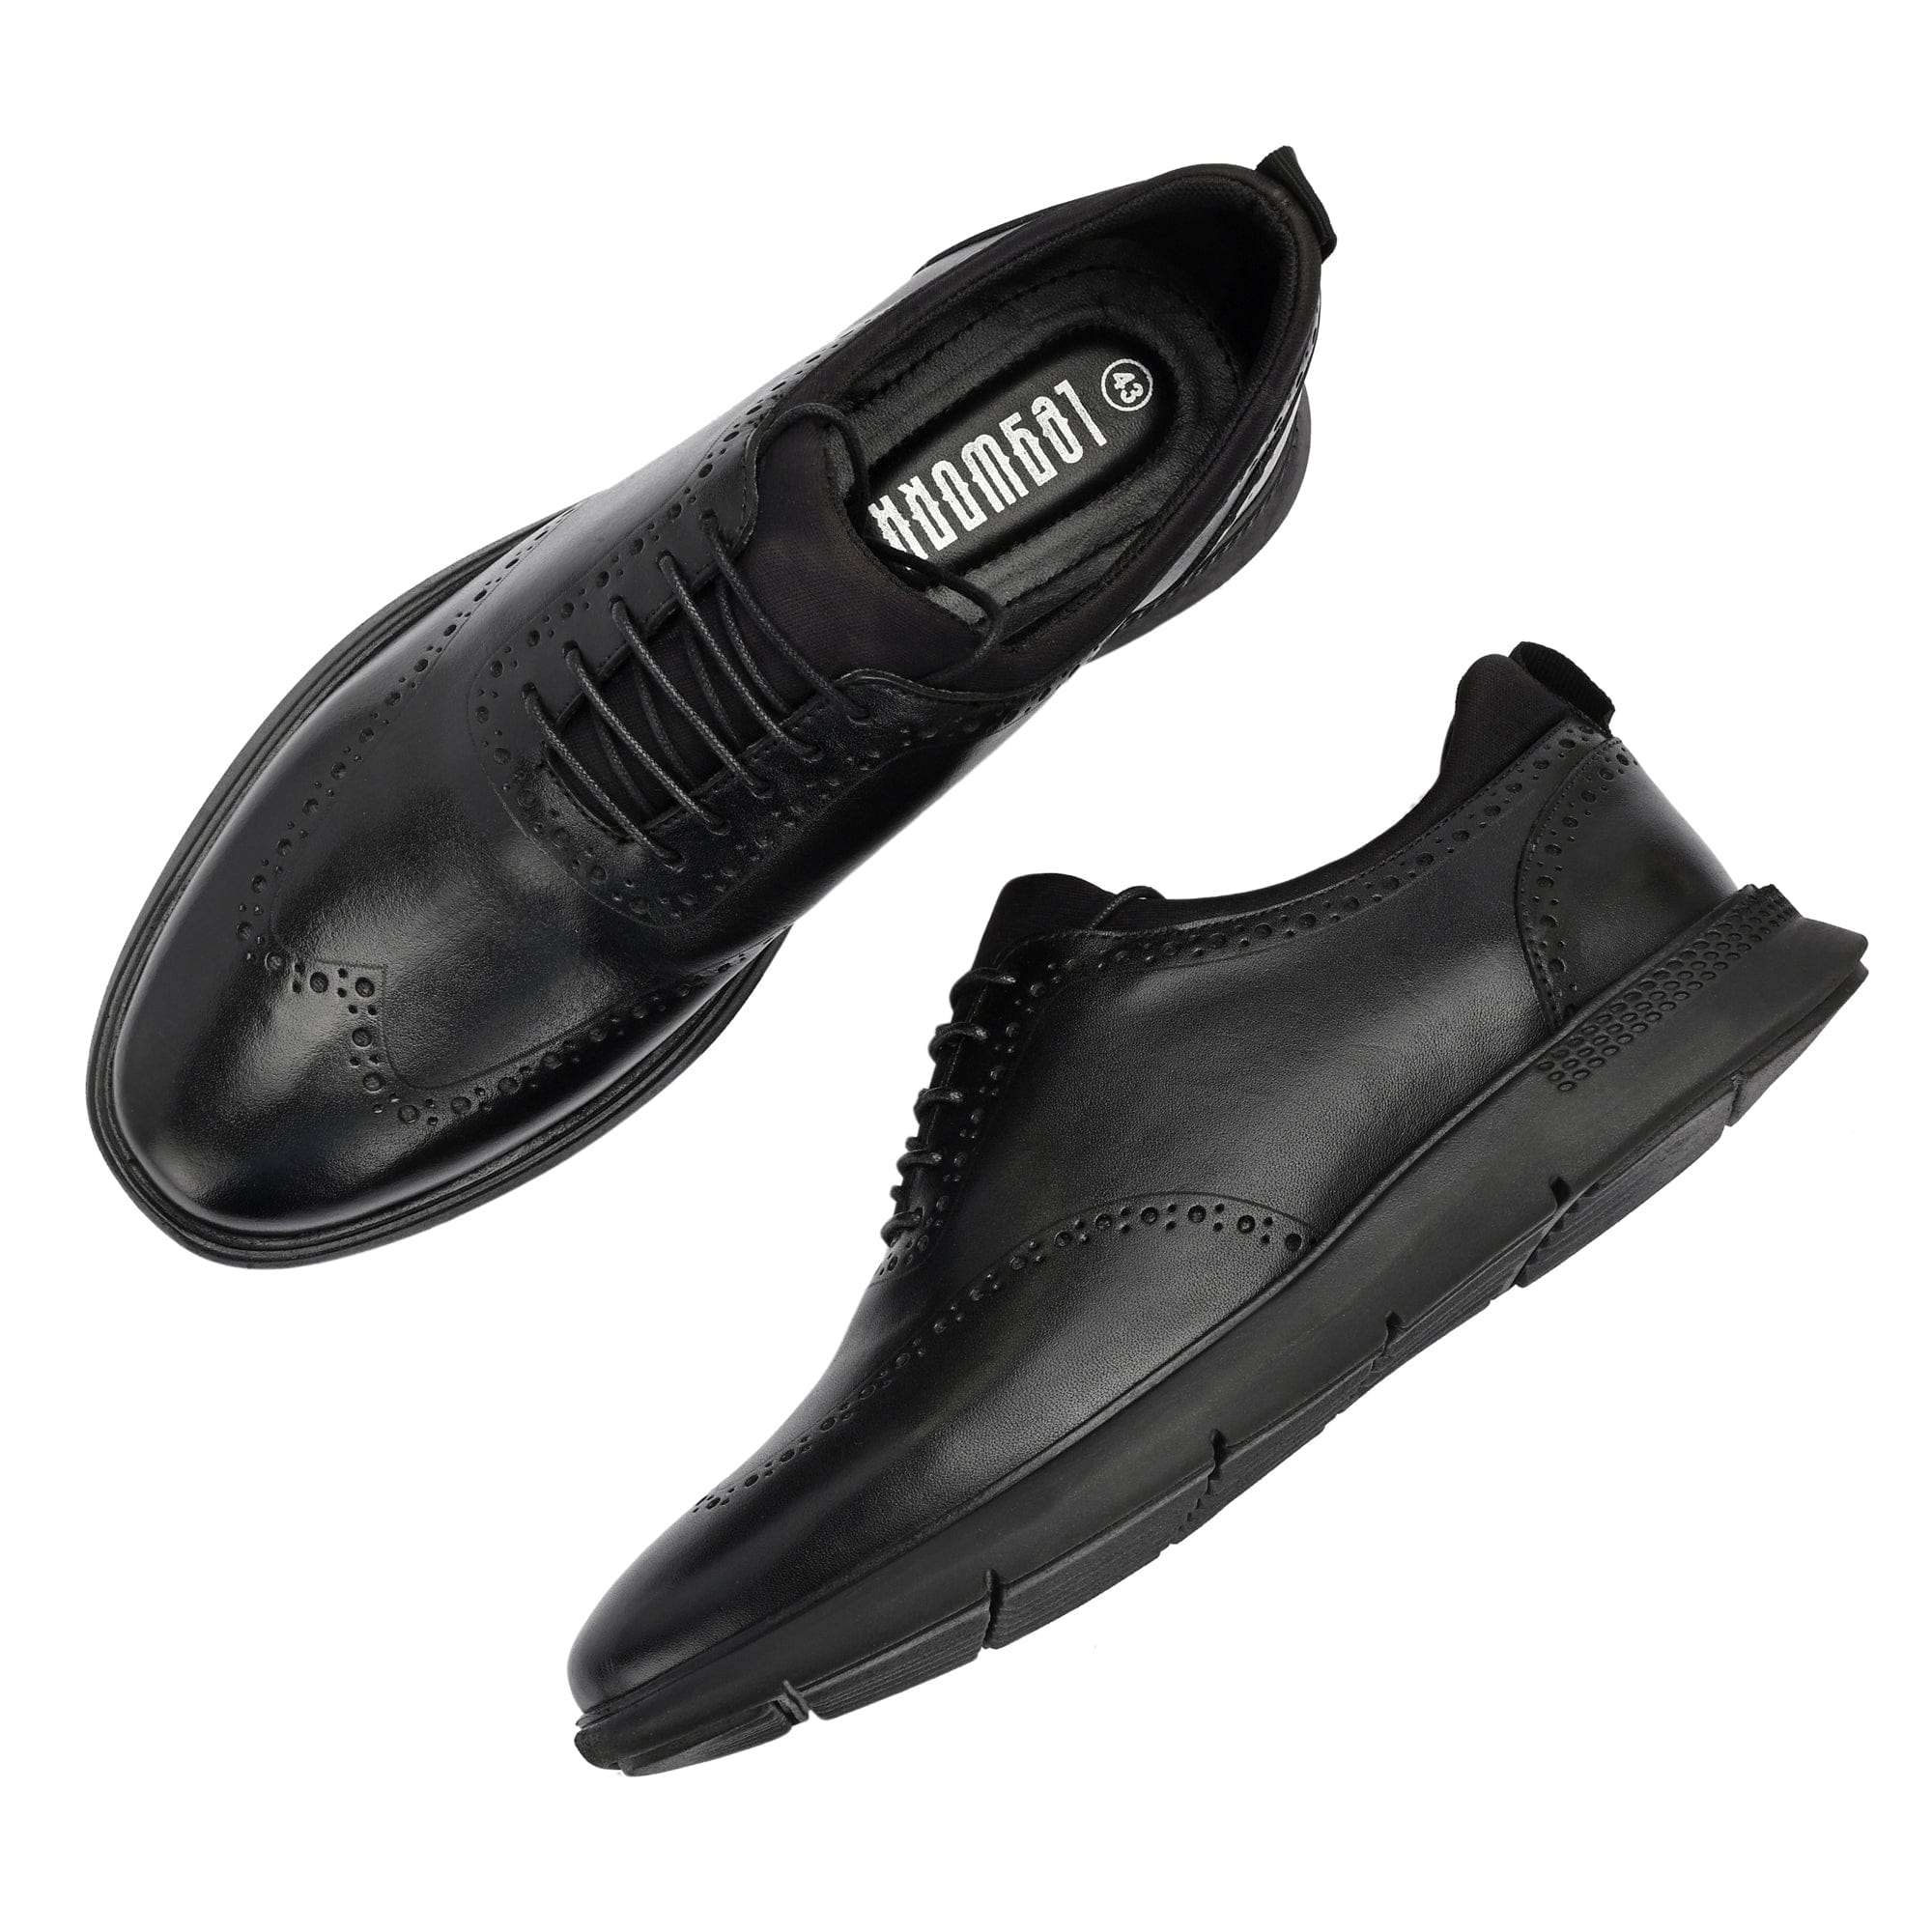 Legwork Brogue 2.0 Black Italian Leather Shoes